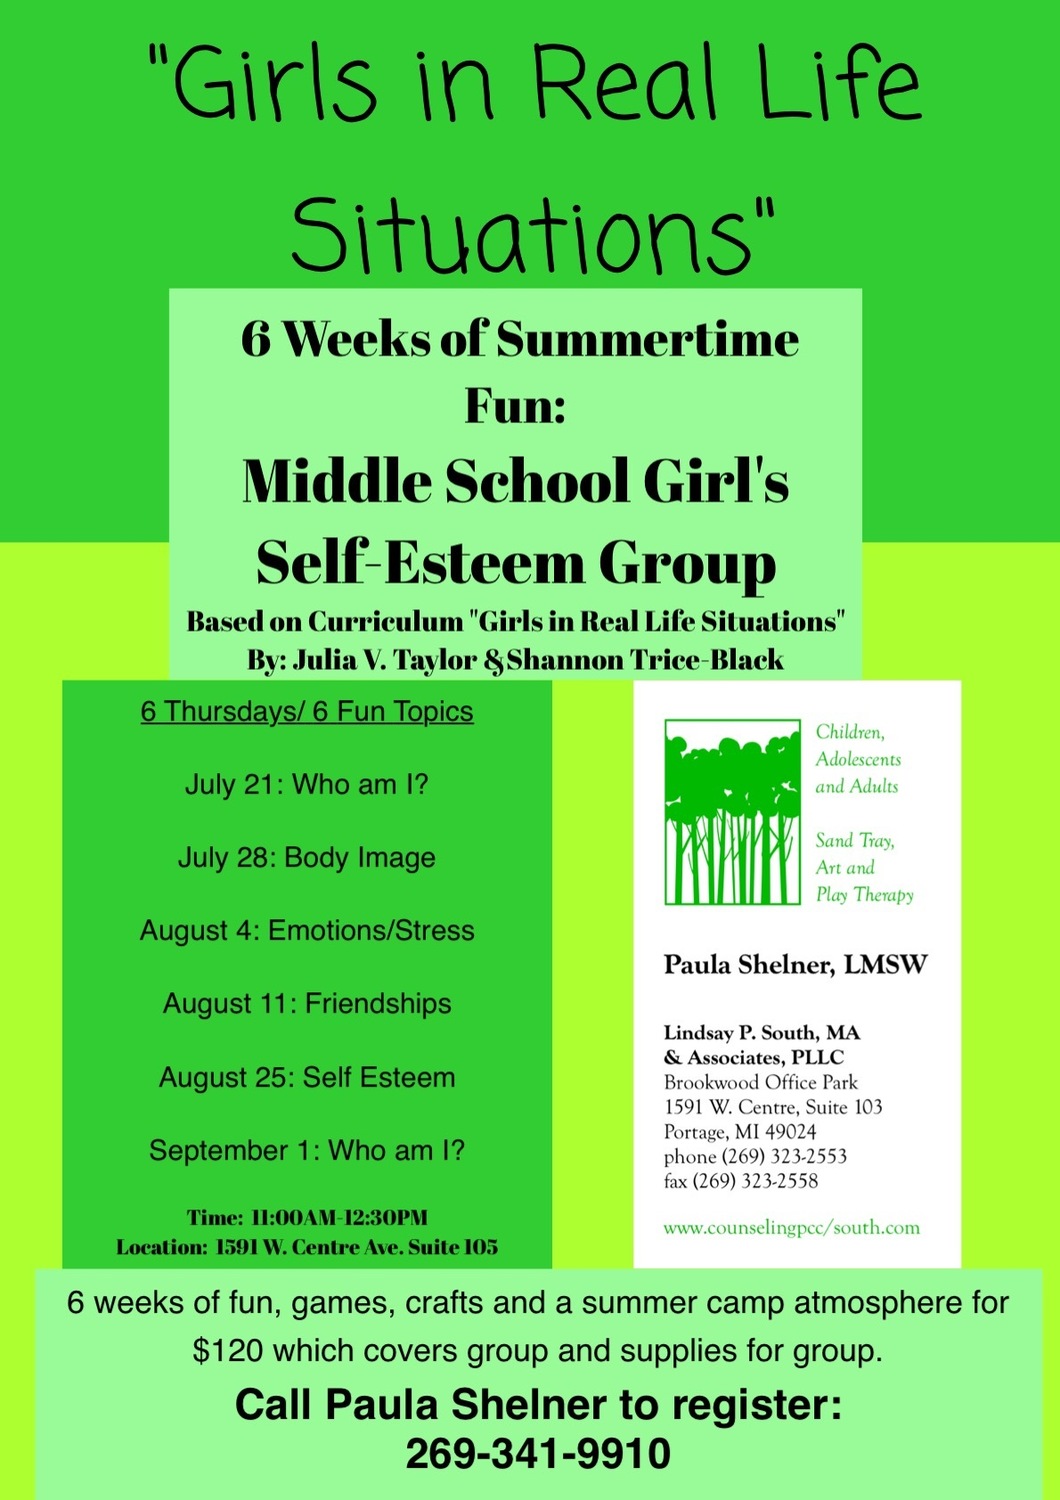 Gallery Photo of Self Esteem Group: Middle School Girls